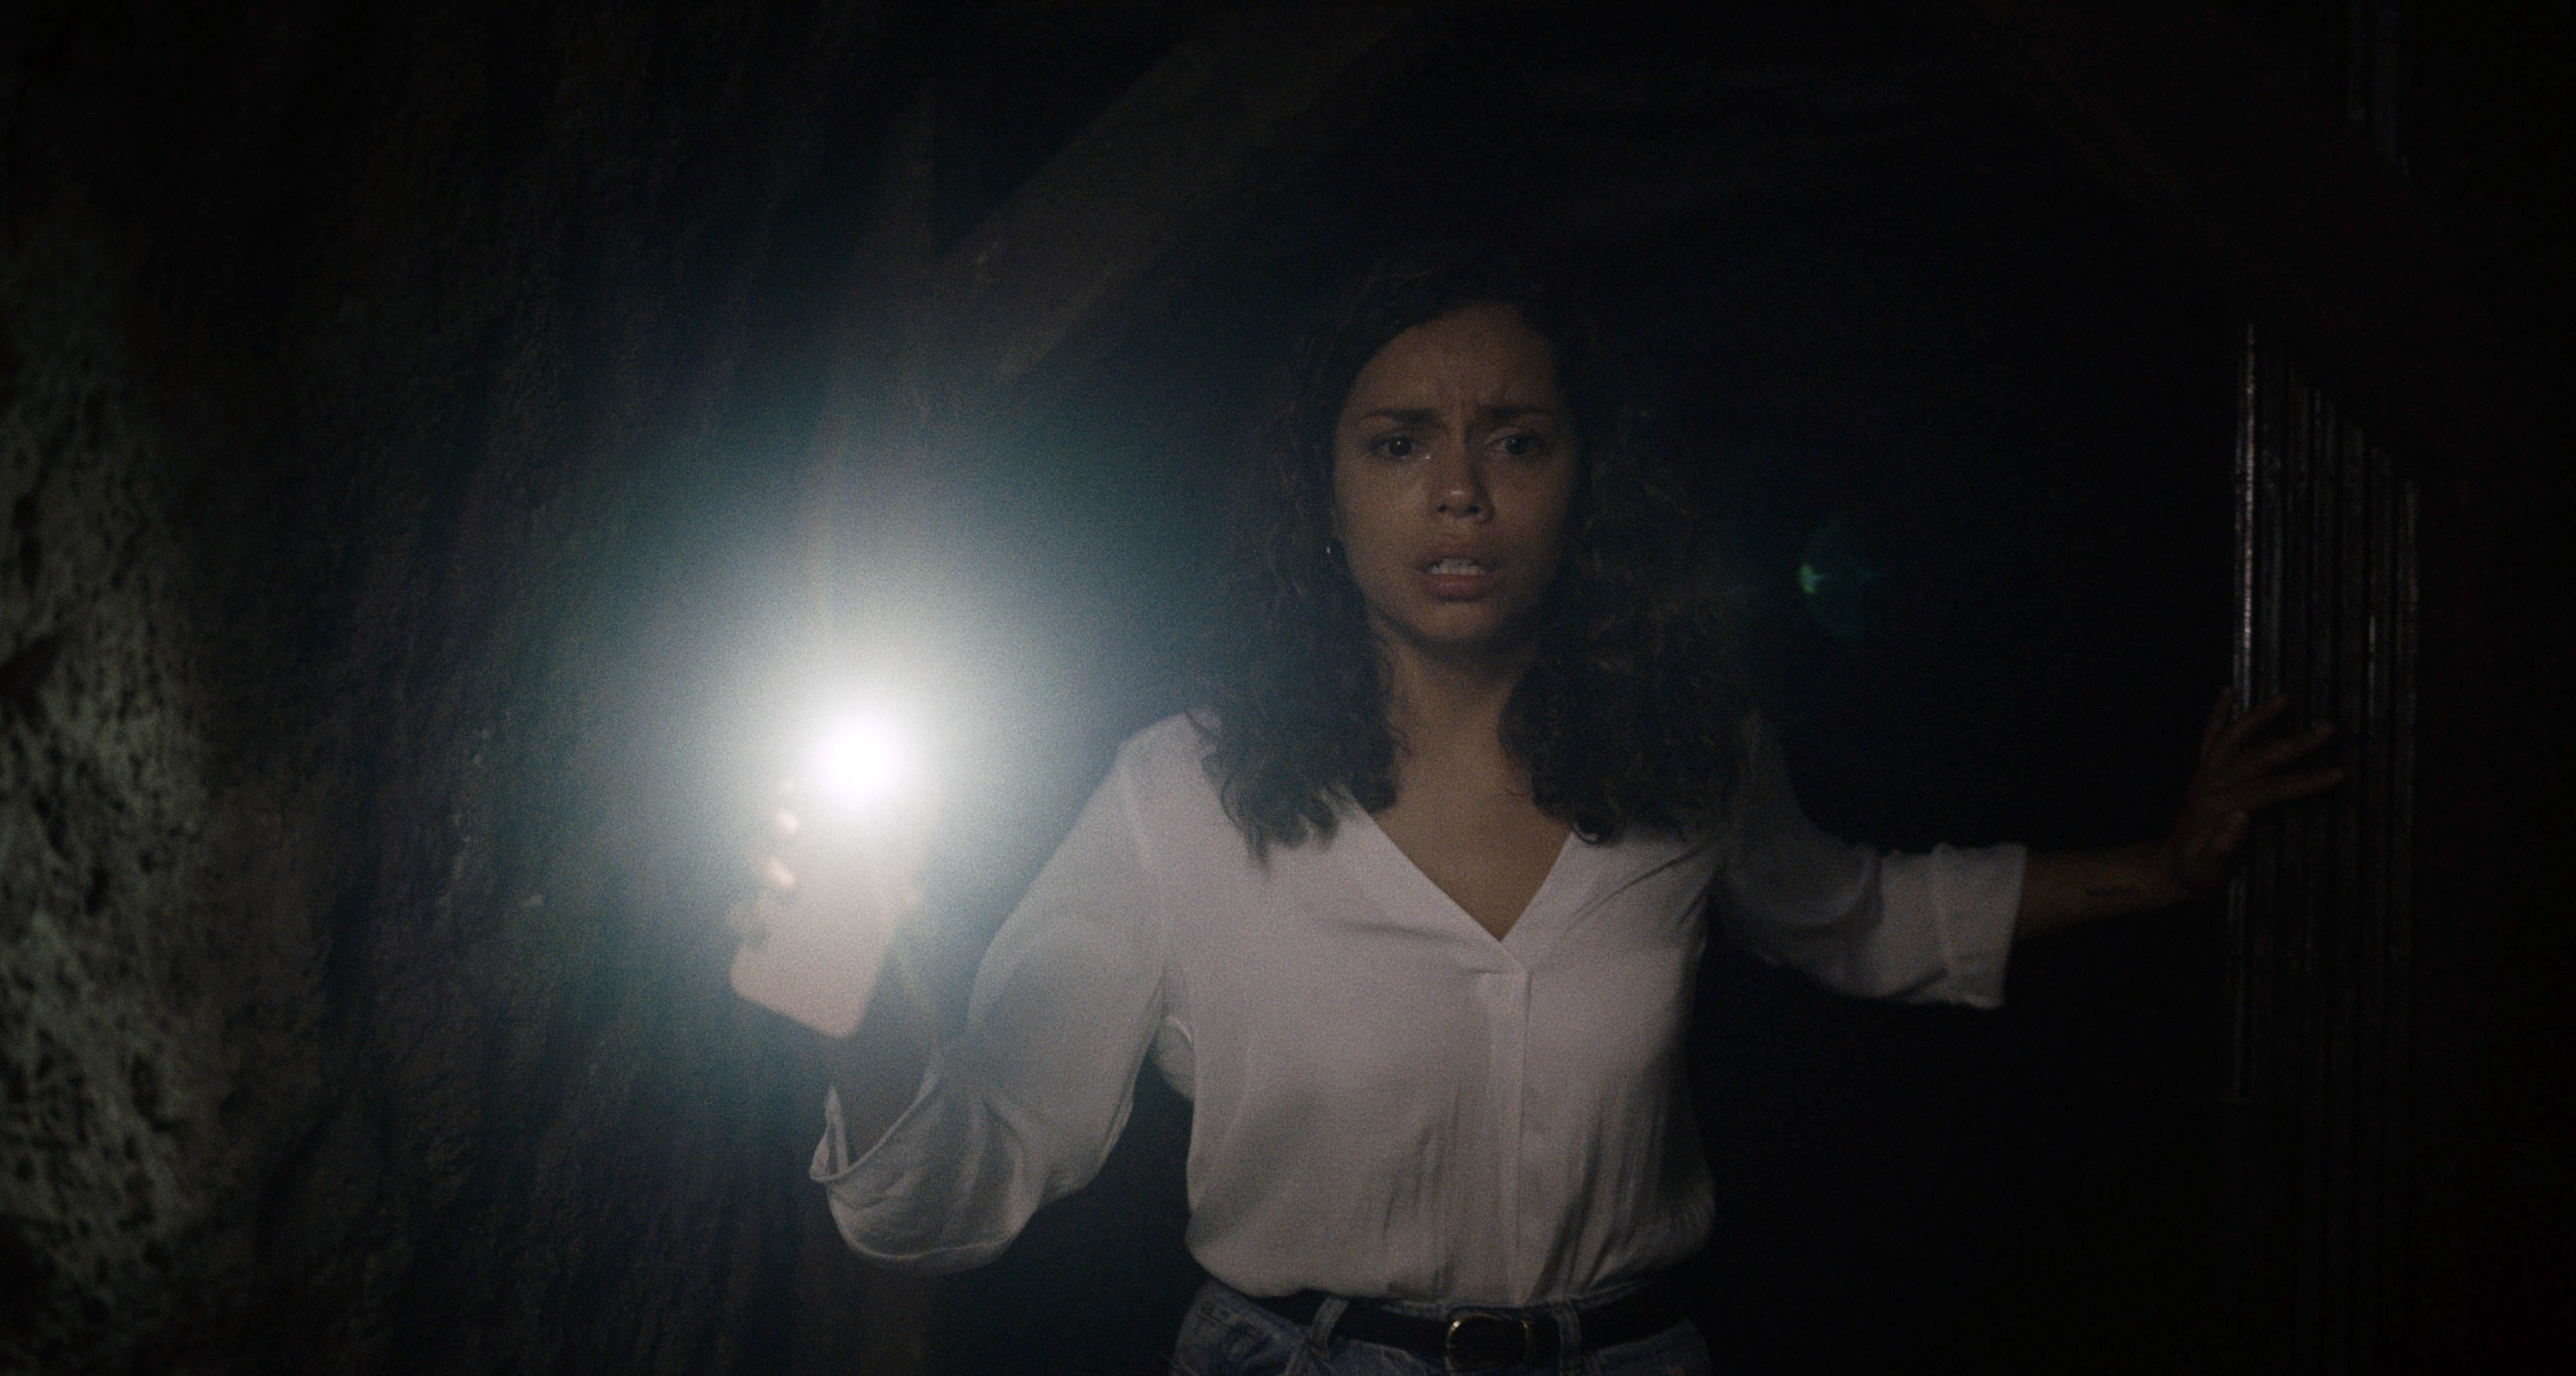 A woman walks through a dark tunnel using her phone flashlight for light